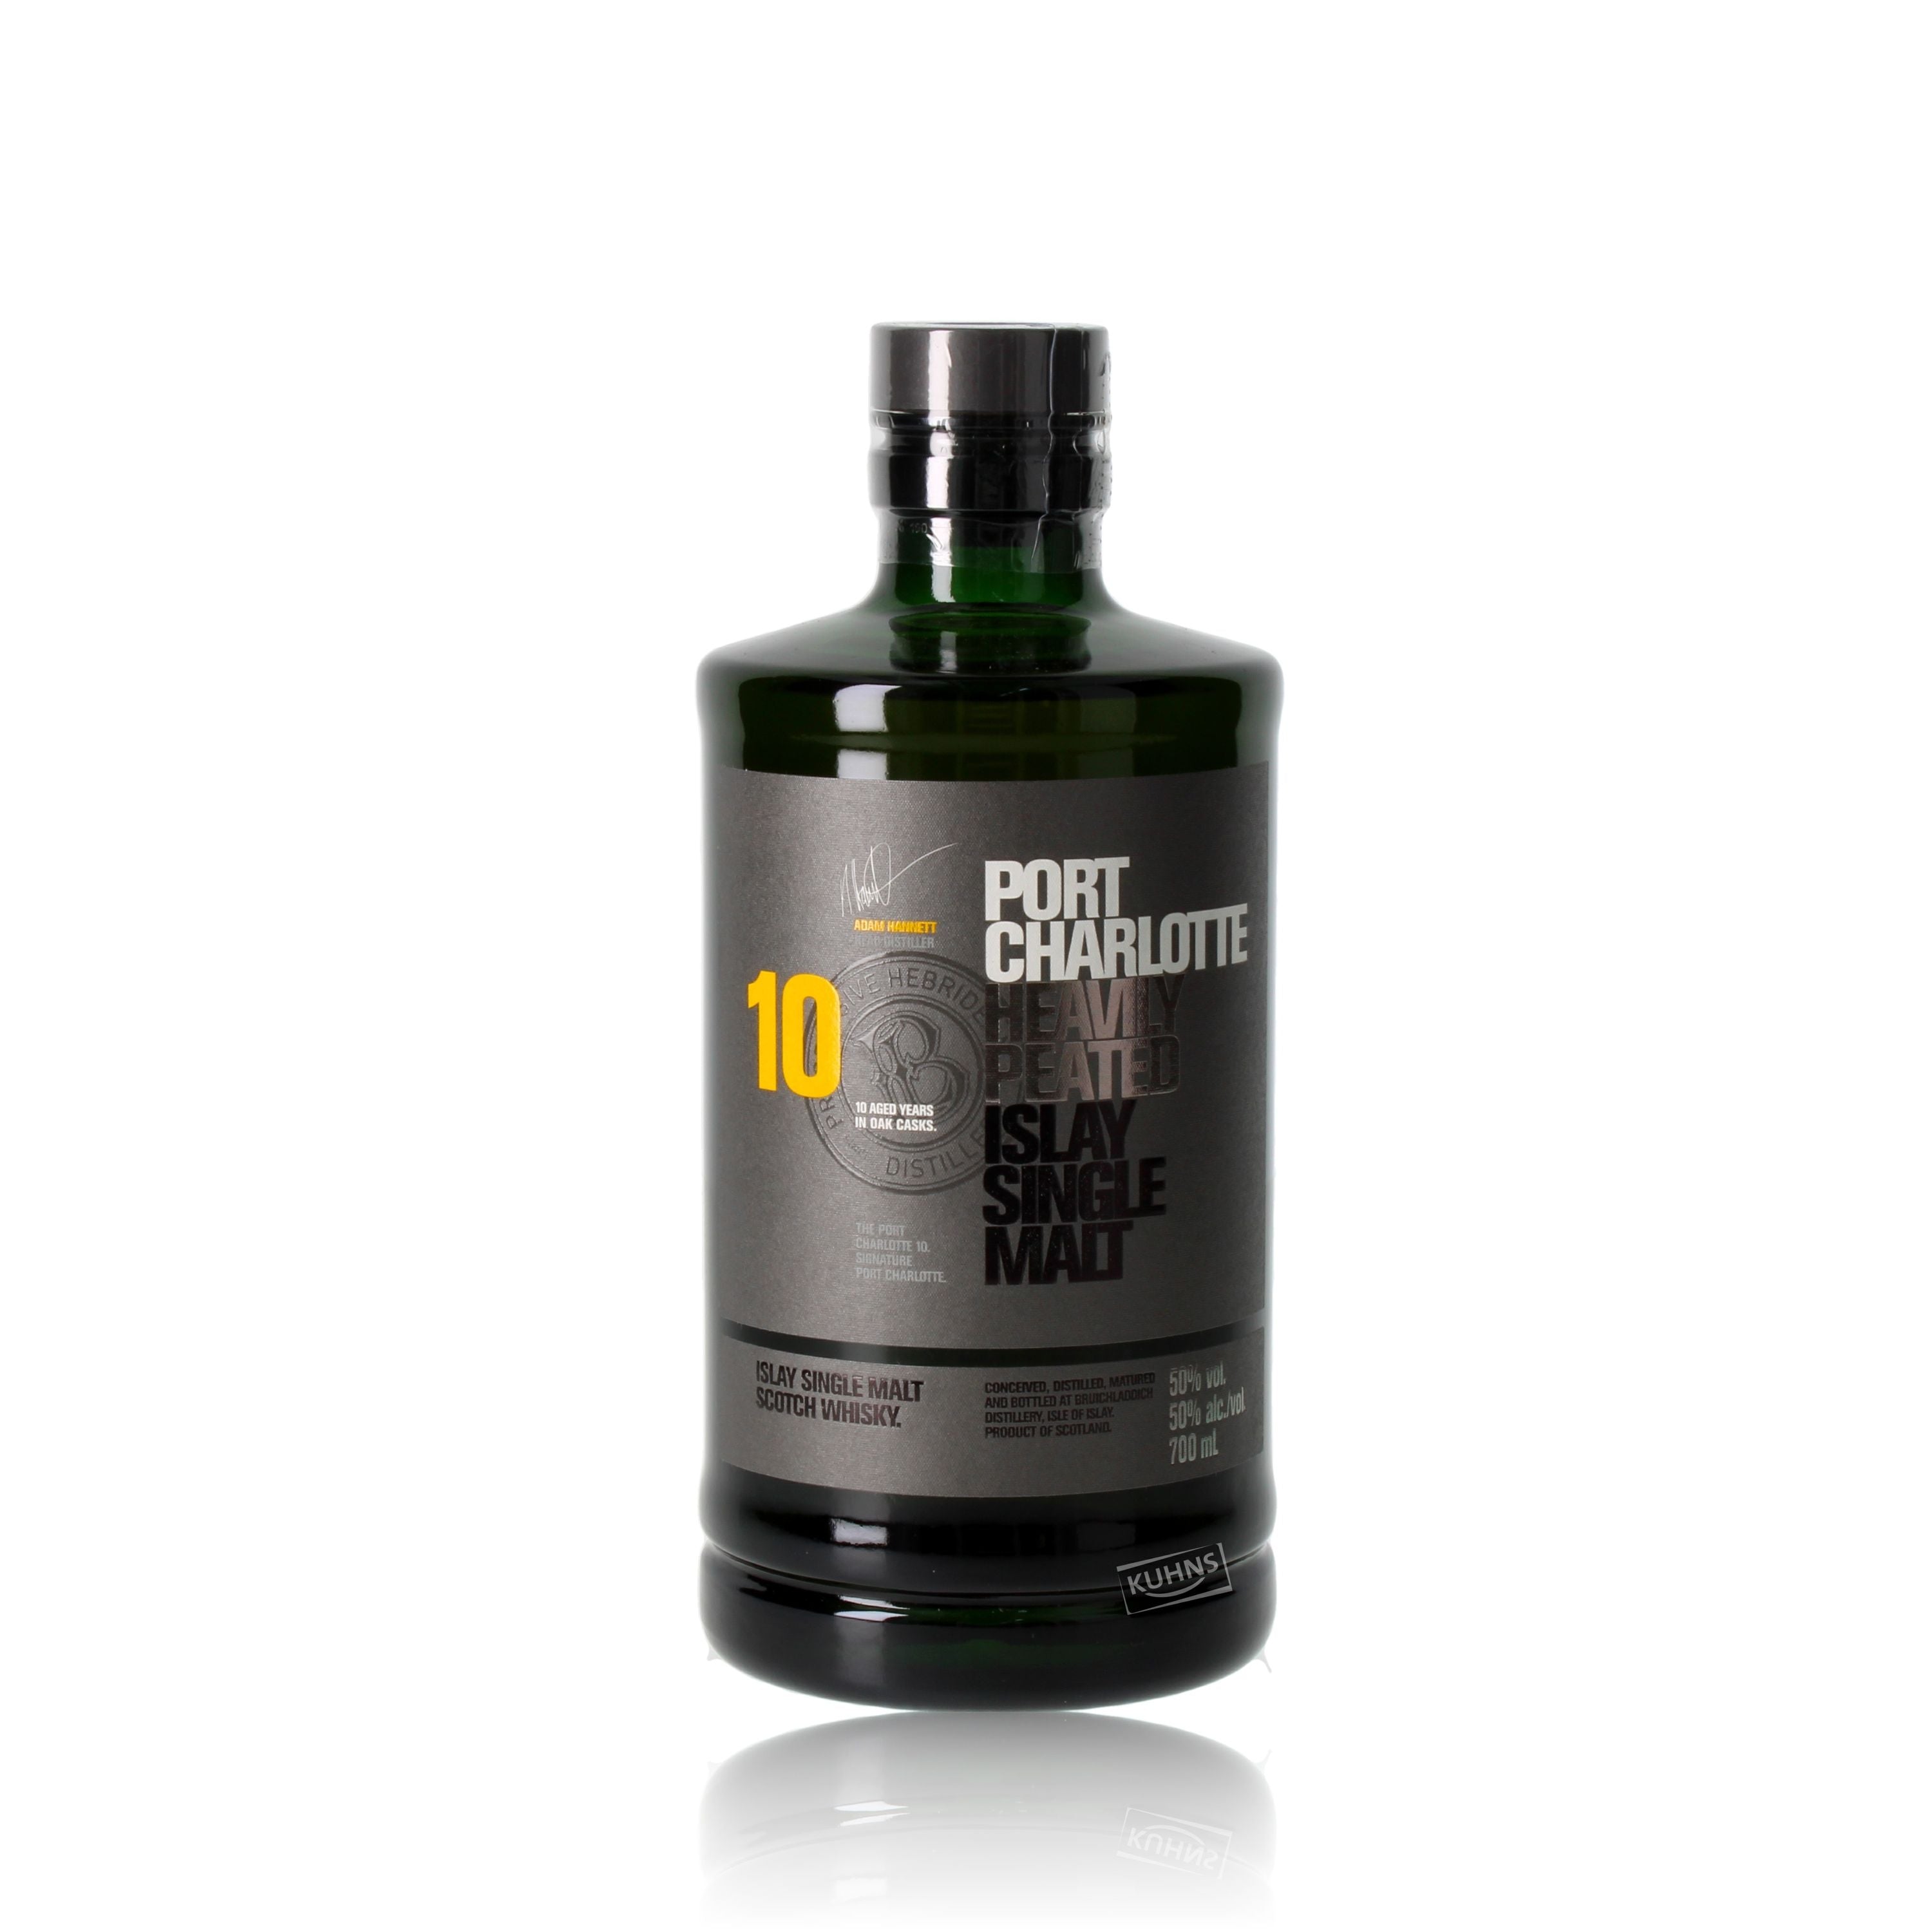 Port Charlotte 10 Years Islay Single Malt Scotch Whiskey 0.7l, alc. 50% by volume